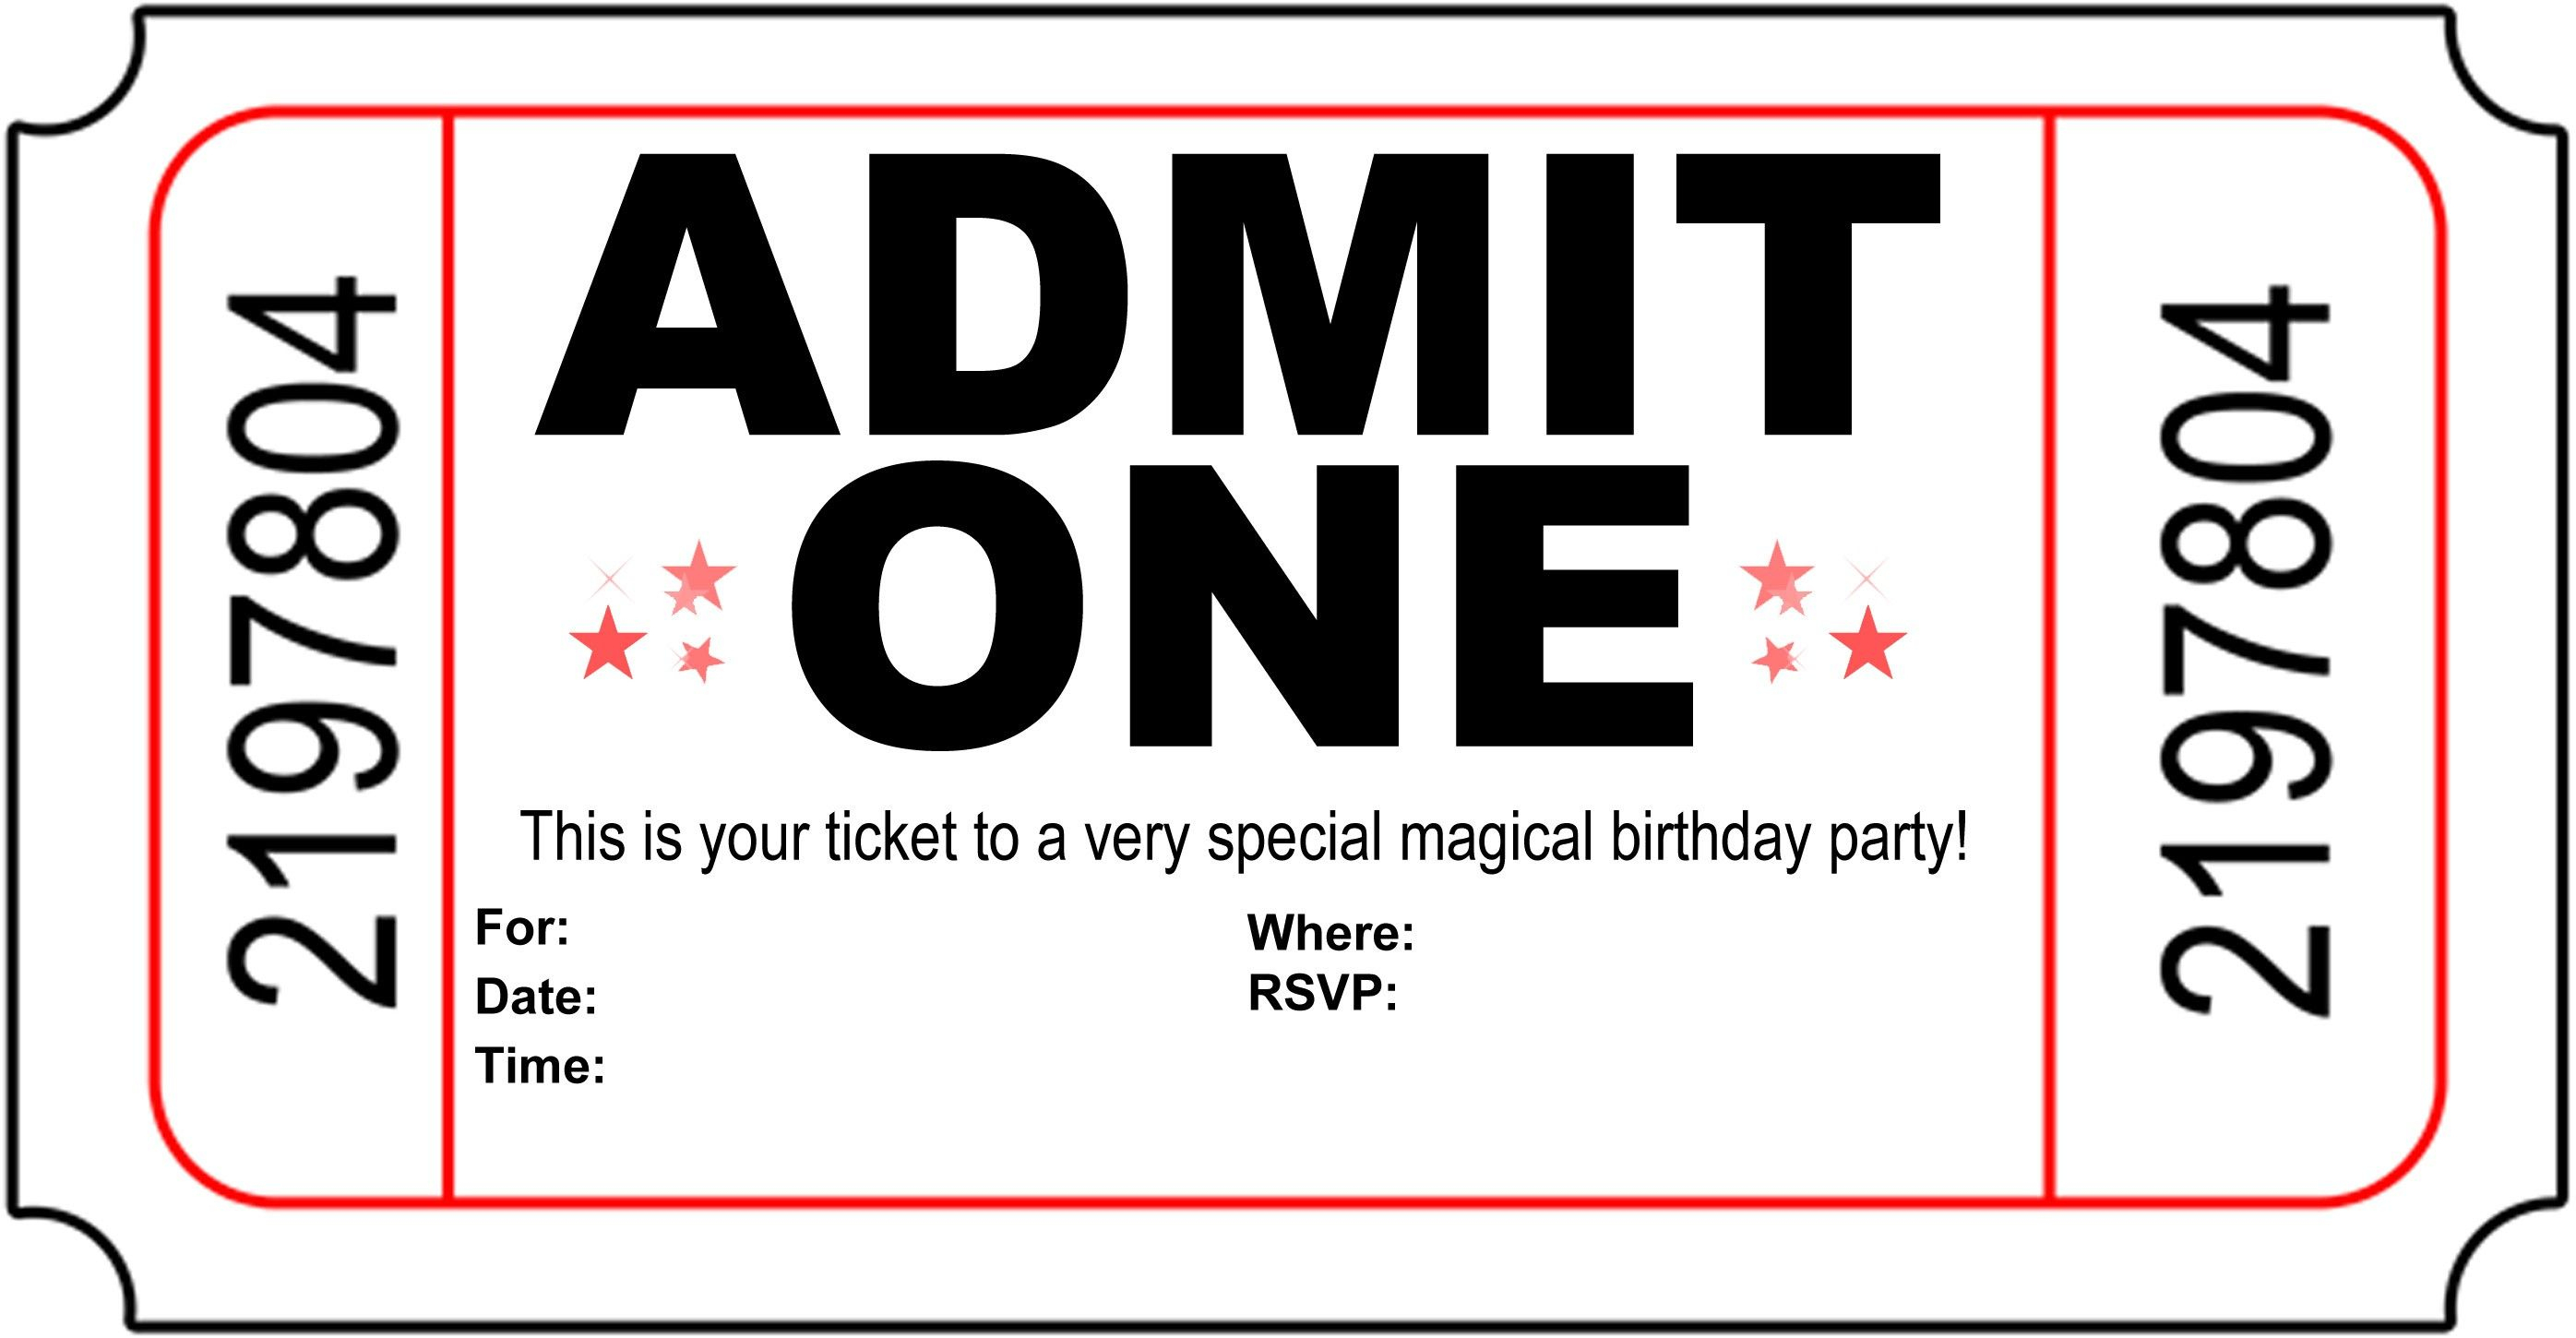 Birthday Party Invitation Free Printable | Printshop. | Pinterest - Free Printable Movie Themed Invitations